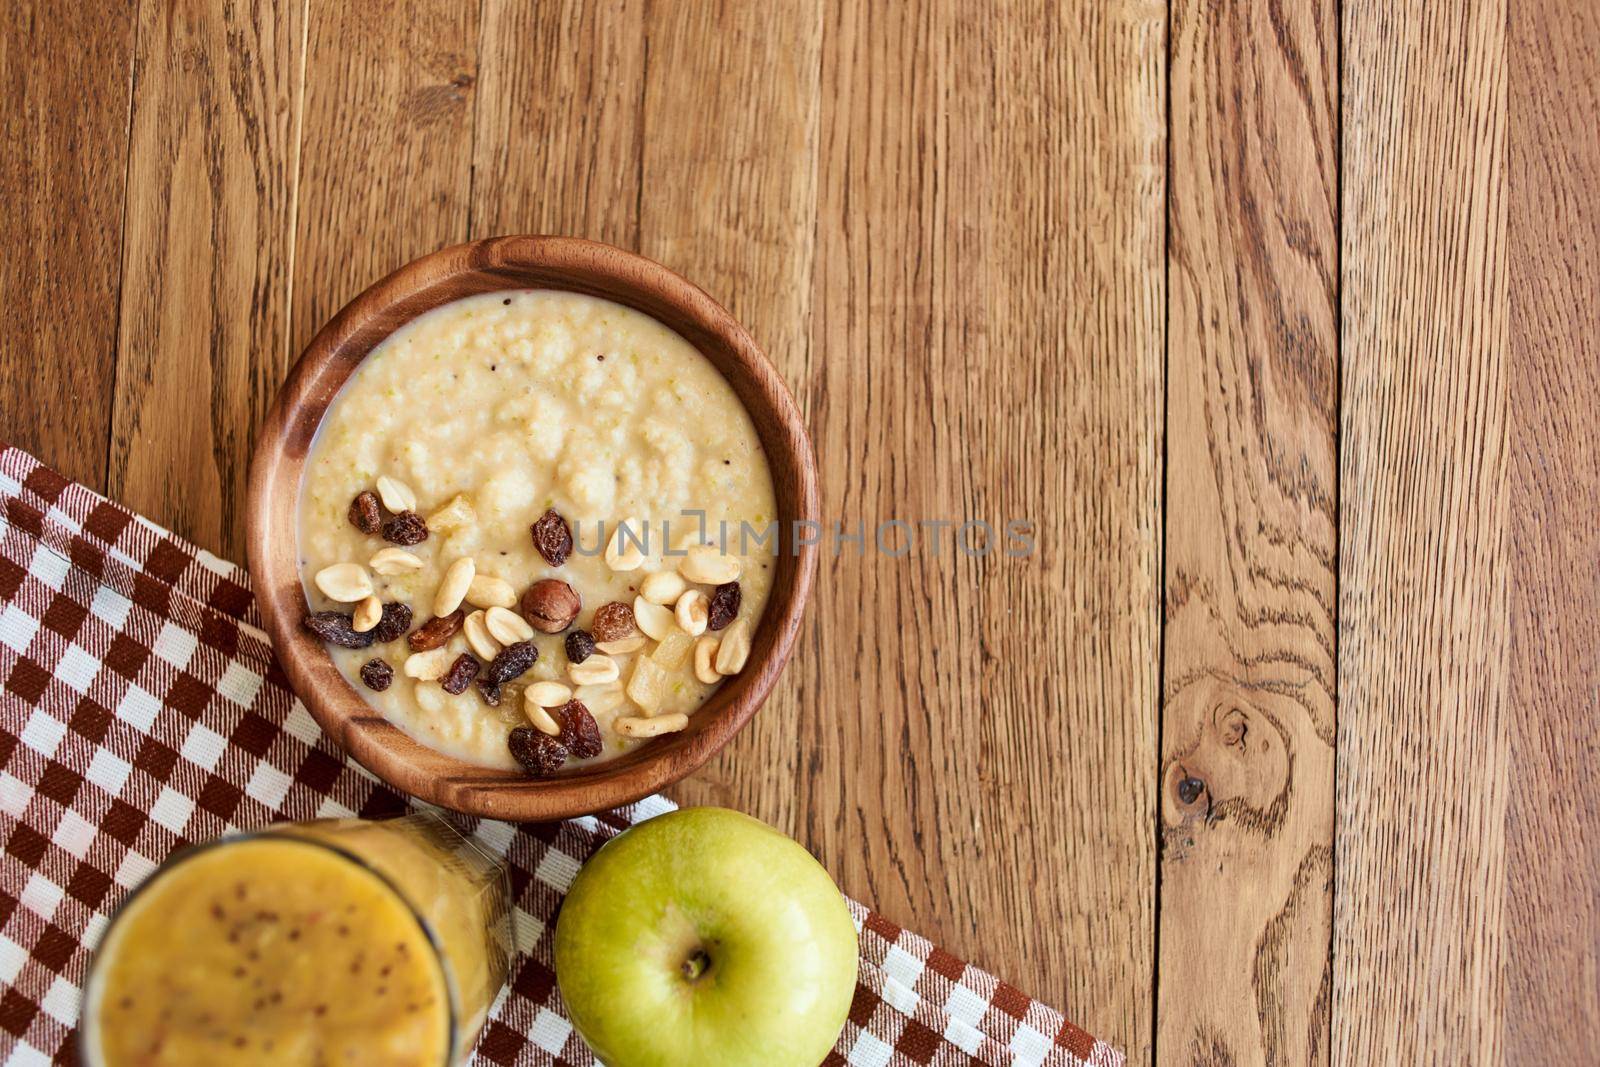 fruit plate dessert breakfast snack healthy food vitamins by Vichizh